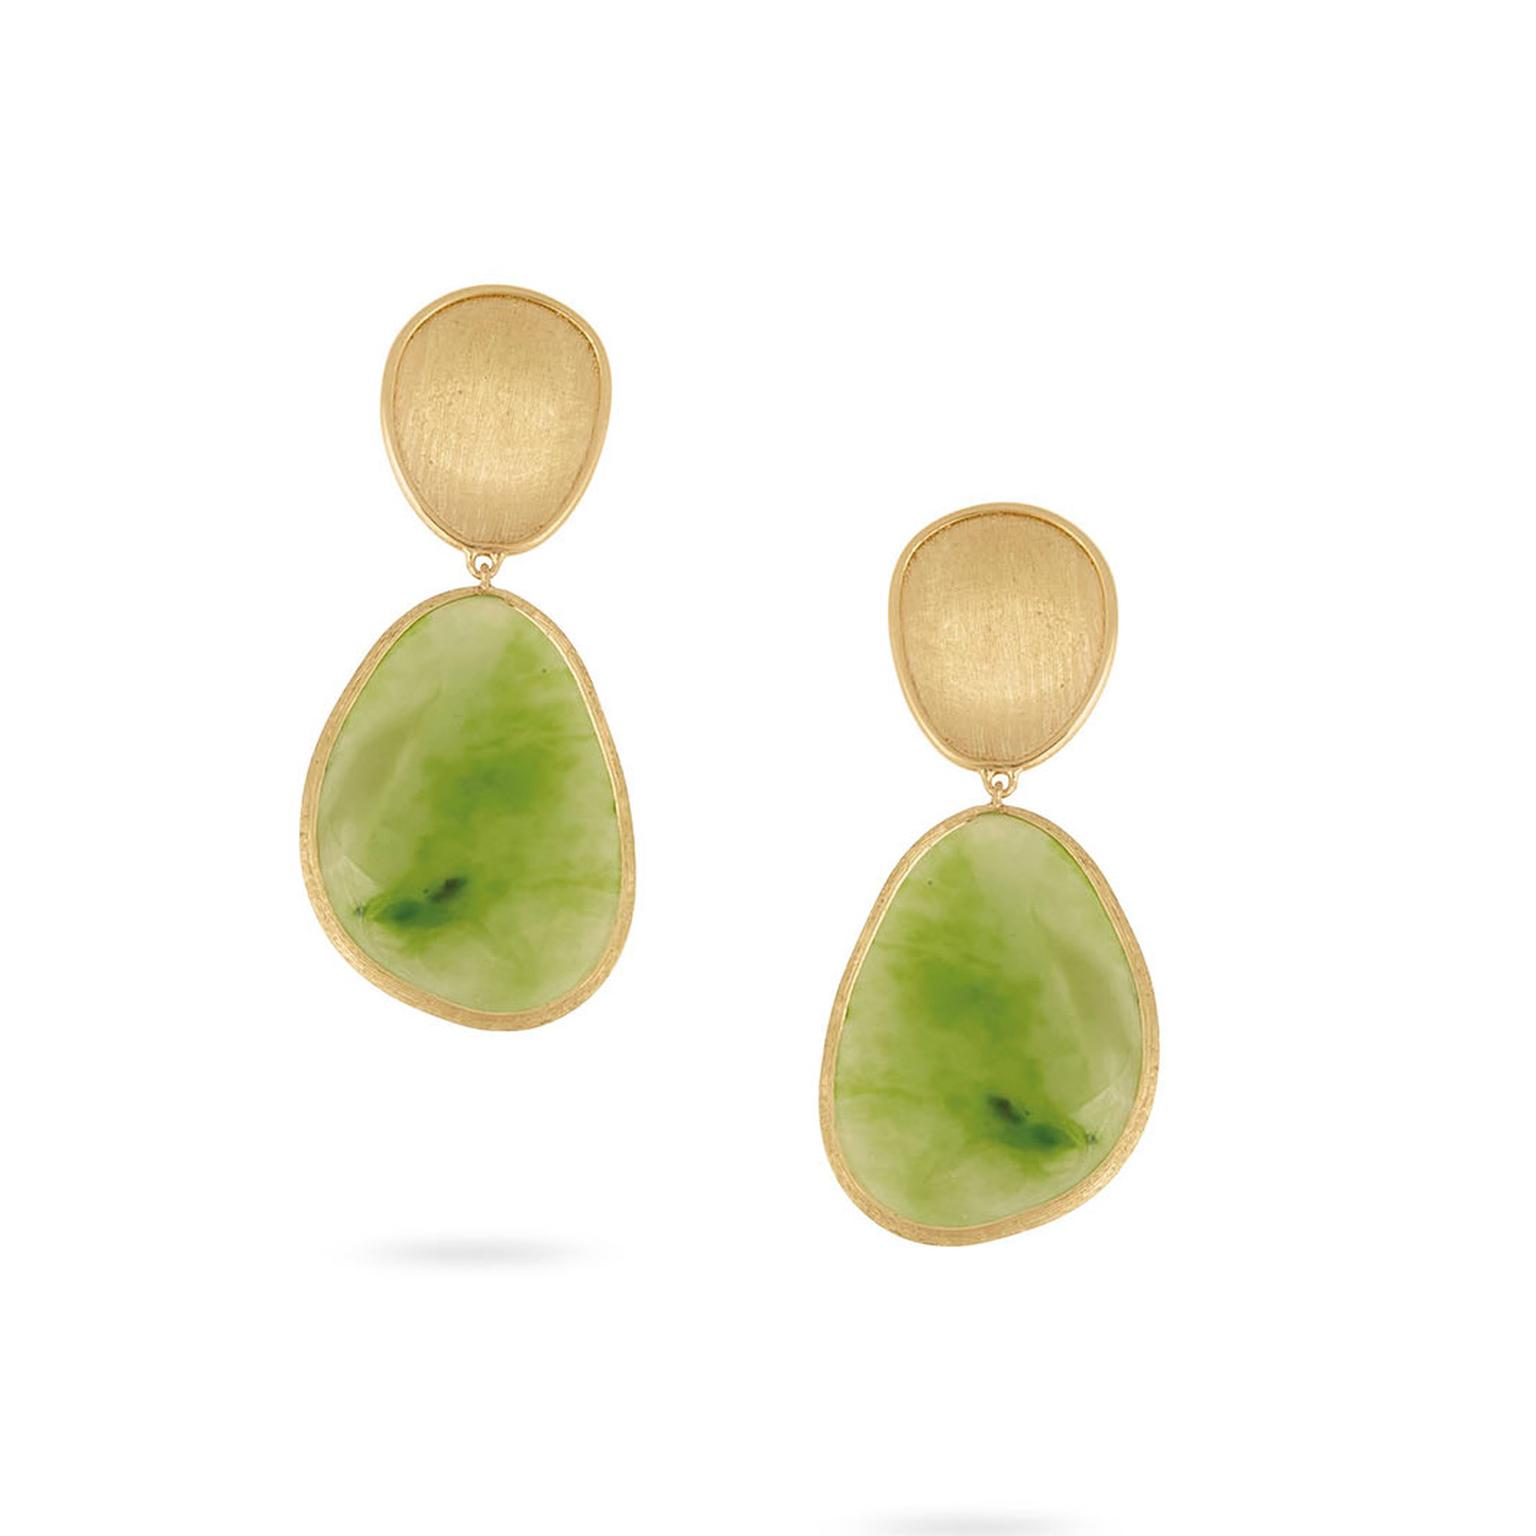 Marco Bicego Lunaria Unico jade earrings